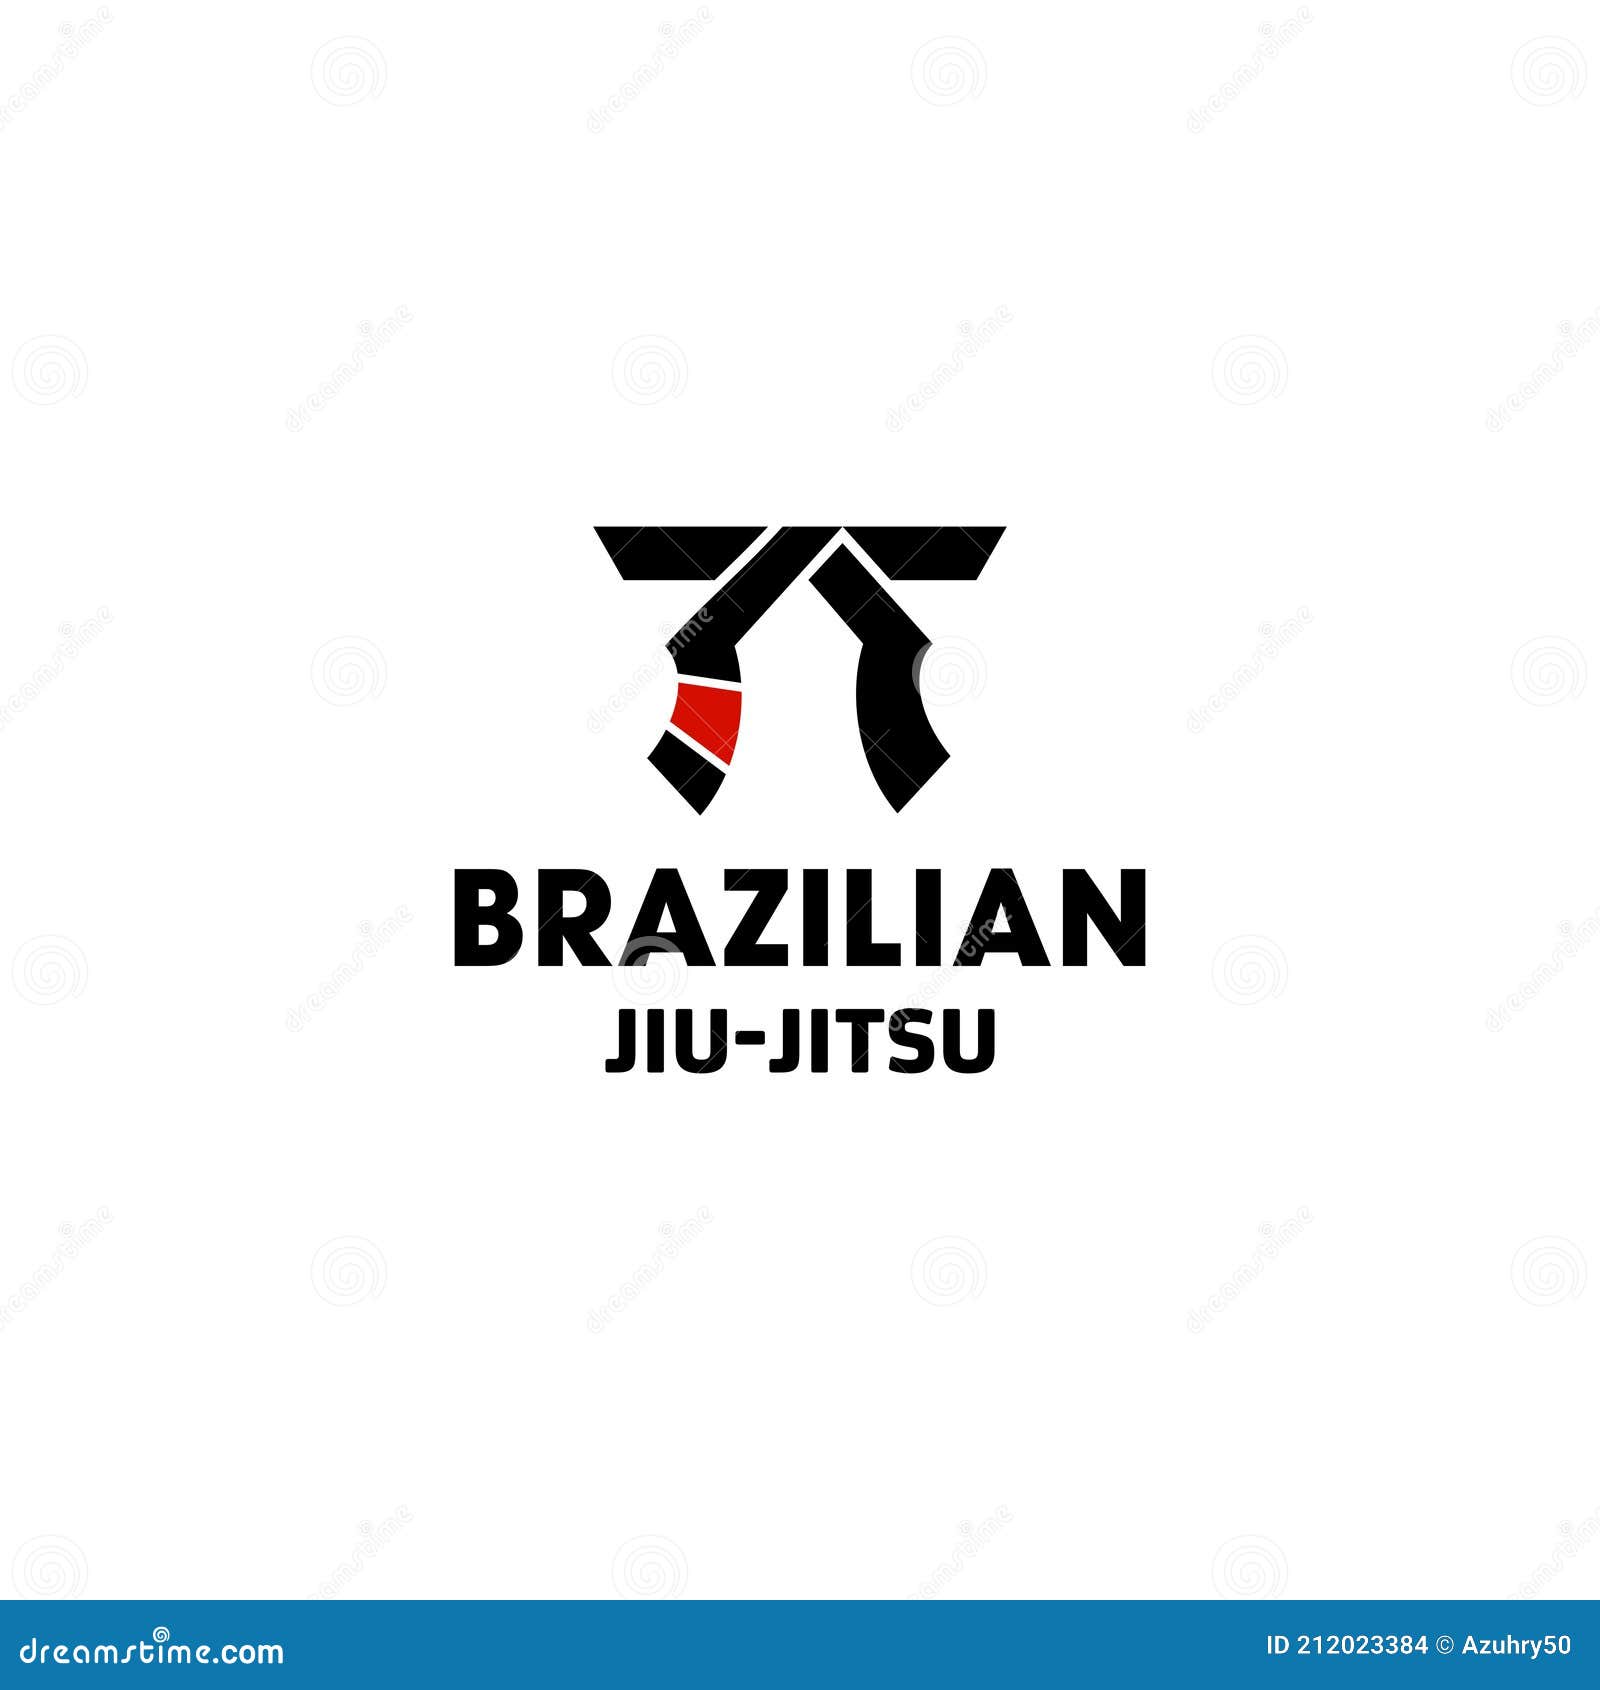 brazilian jiu-jitsu simple belt logo   icon , black and red belt icon  ,  for academy